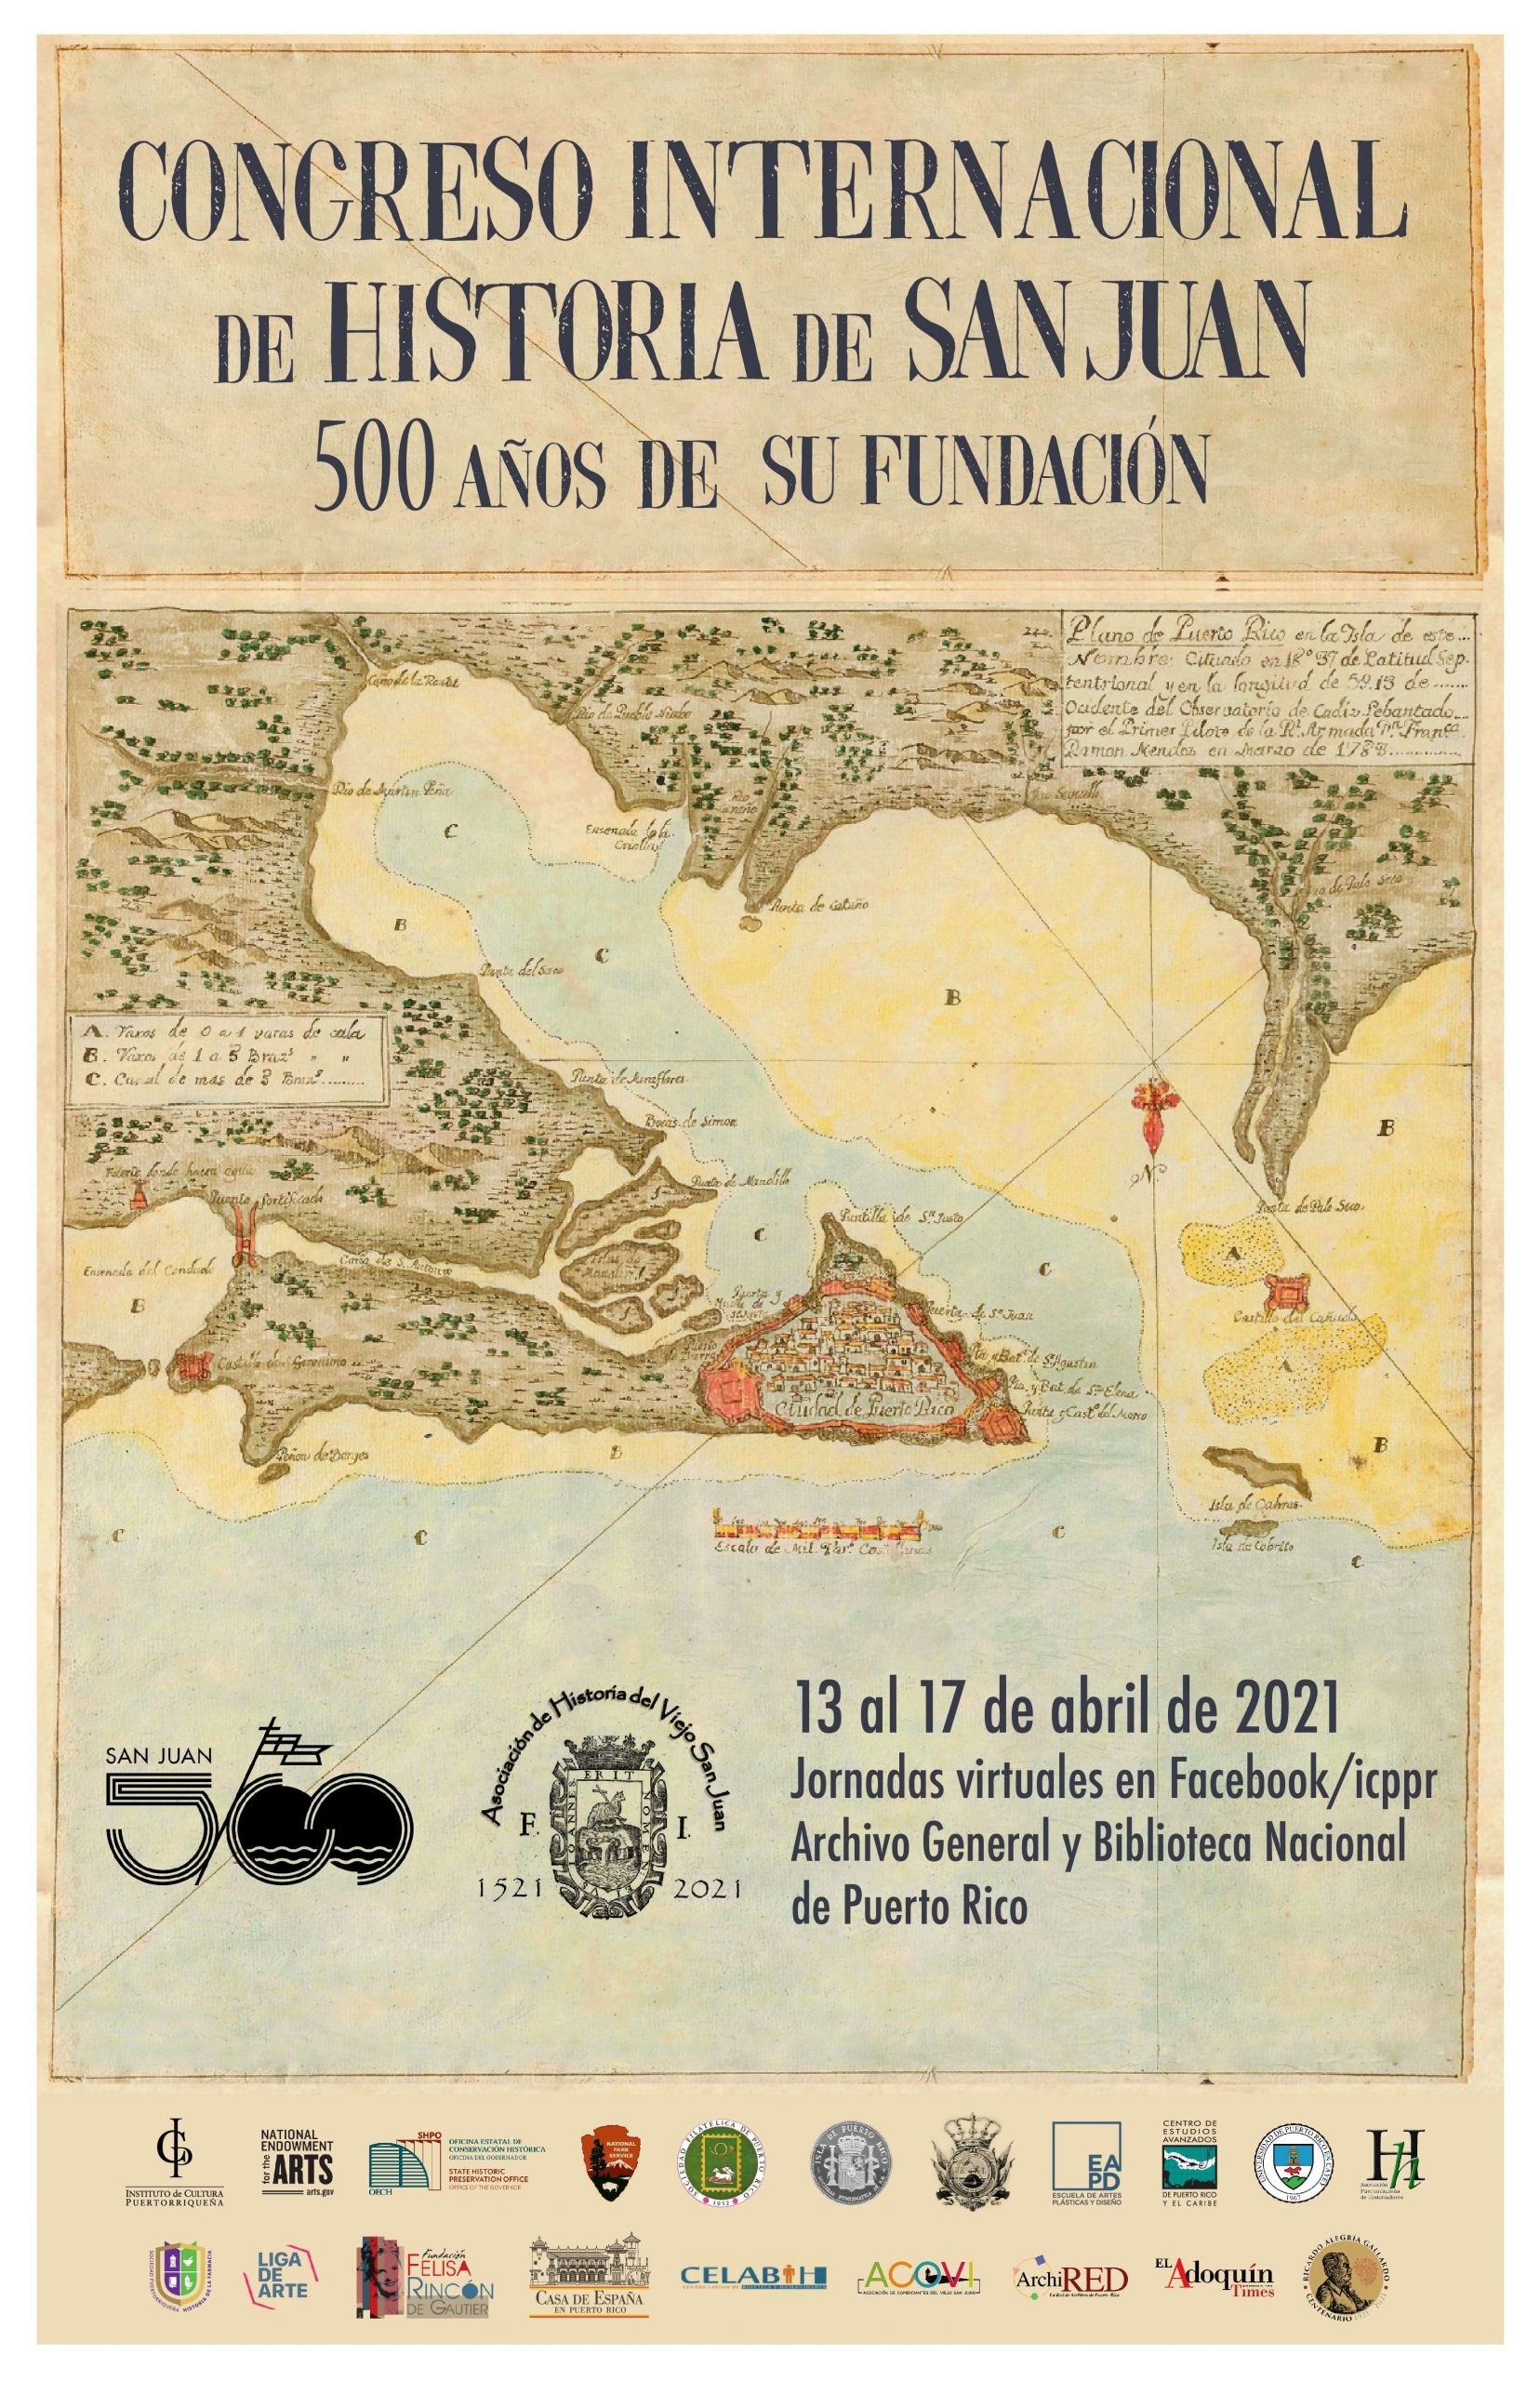 Congreso Internacional de Historia de San Juan